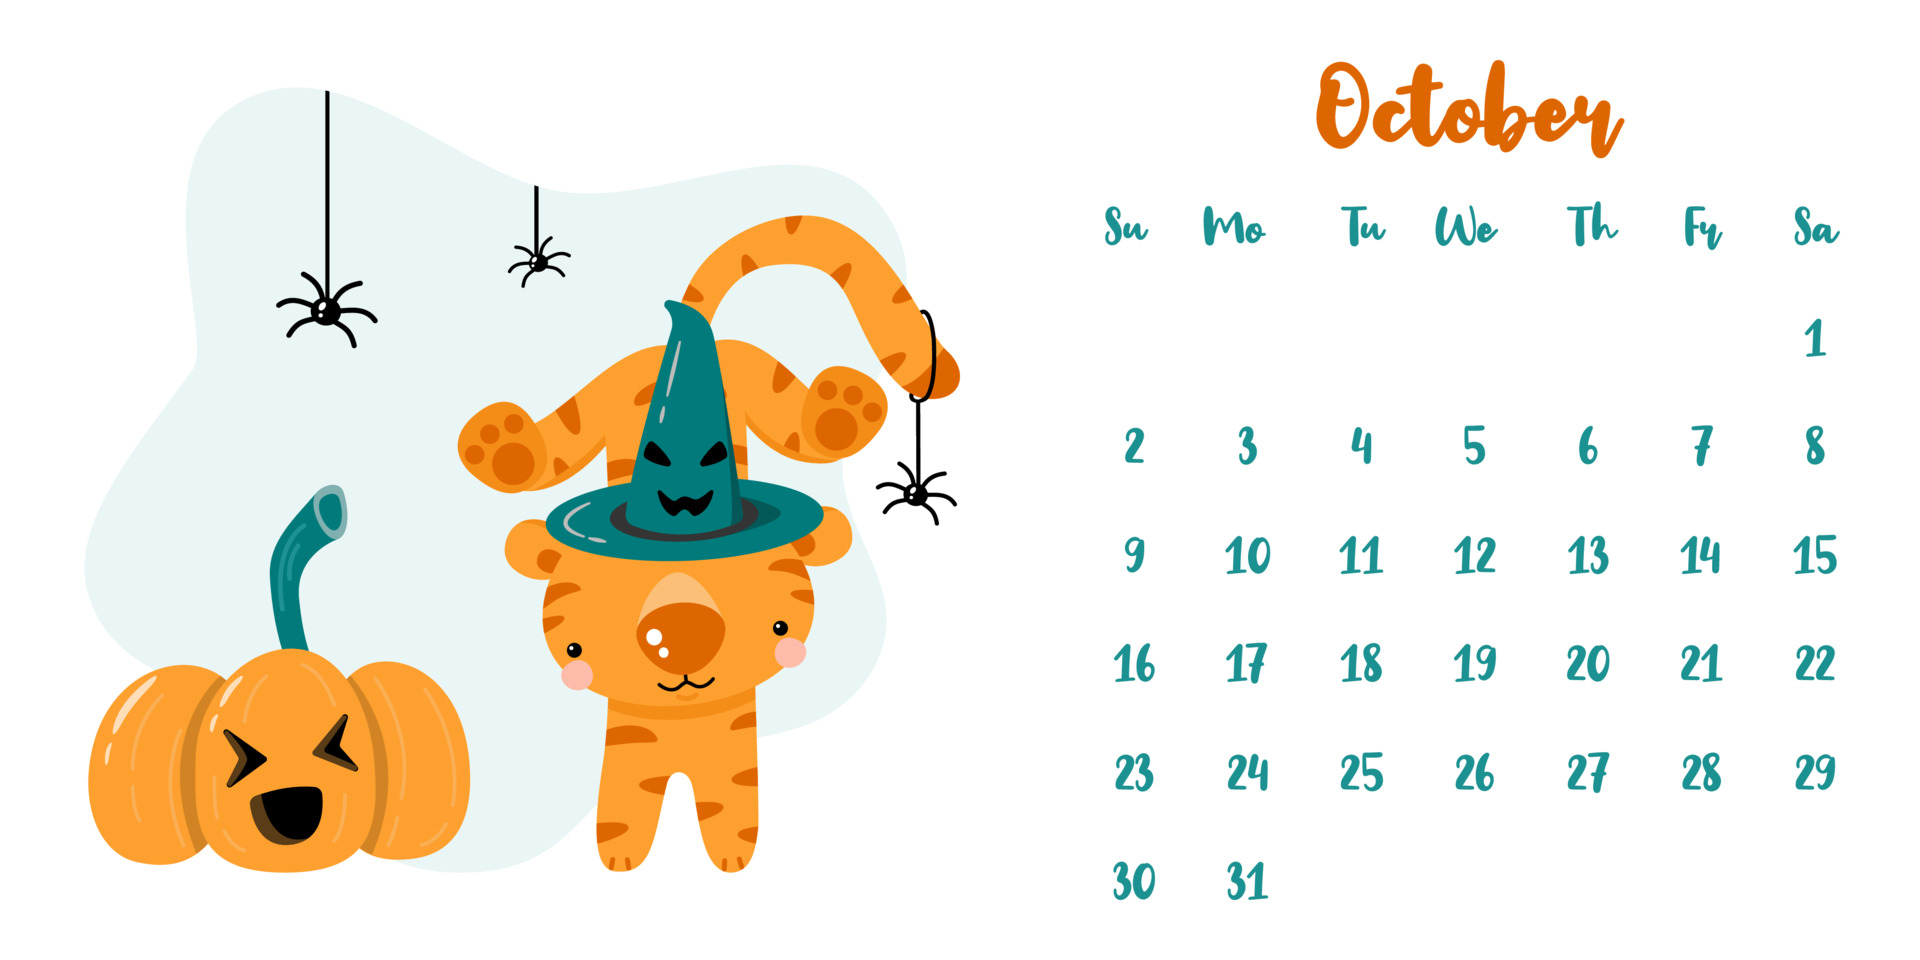 October 2022 Calendar Cute Calendar For October 2022 With Cute Cartoon Tiger And Halloween Pumpkin  3479940 Vector Art At Vecteezy